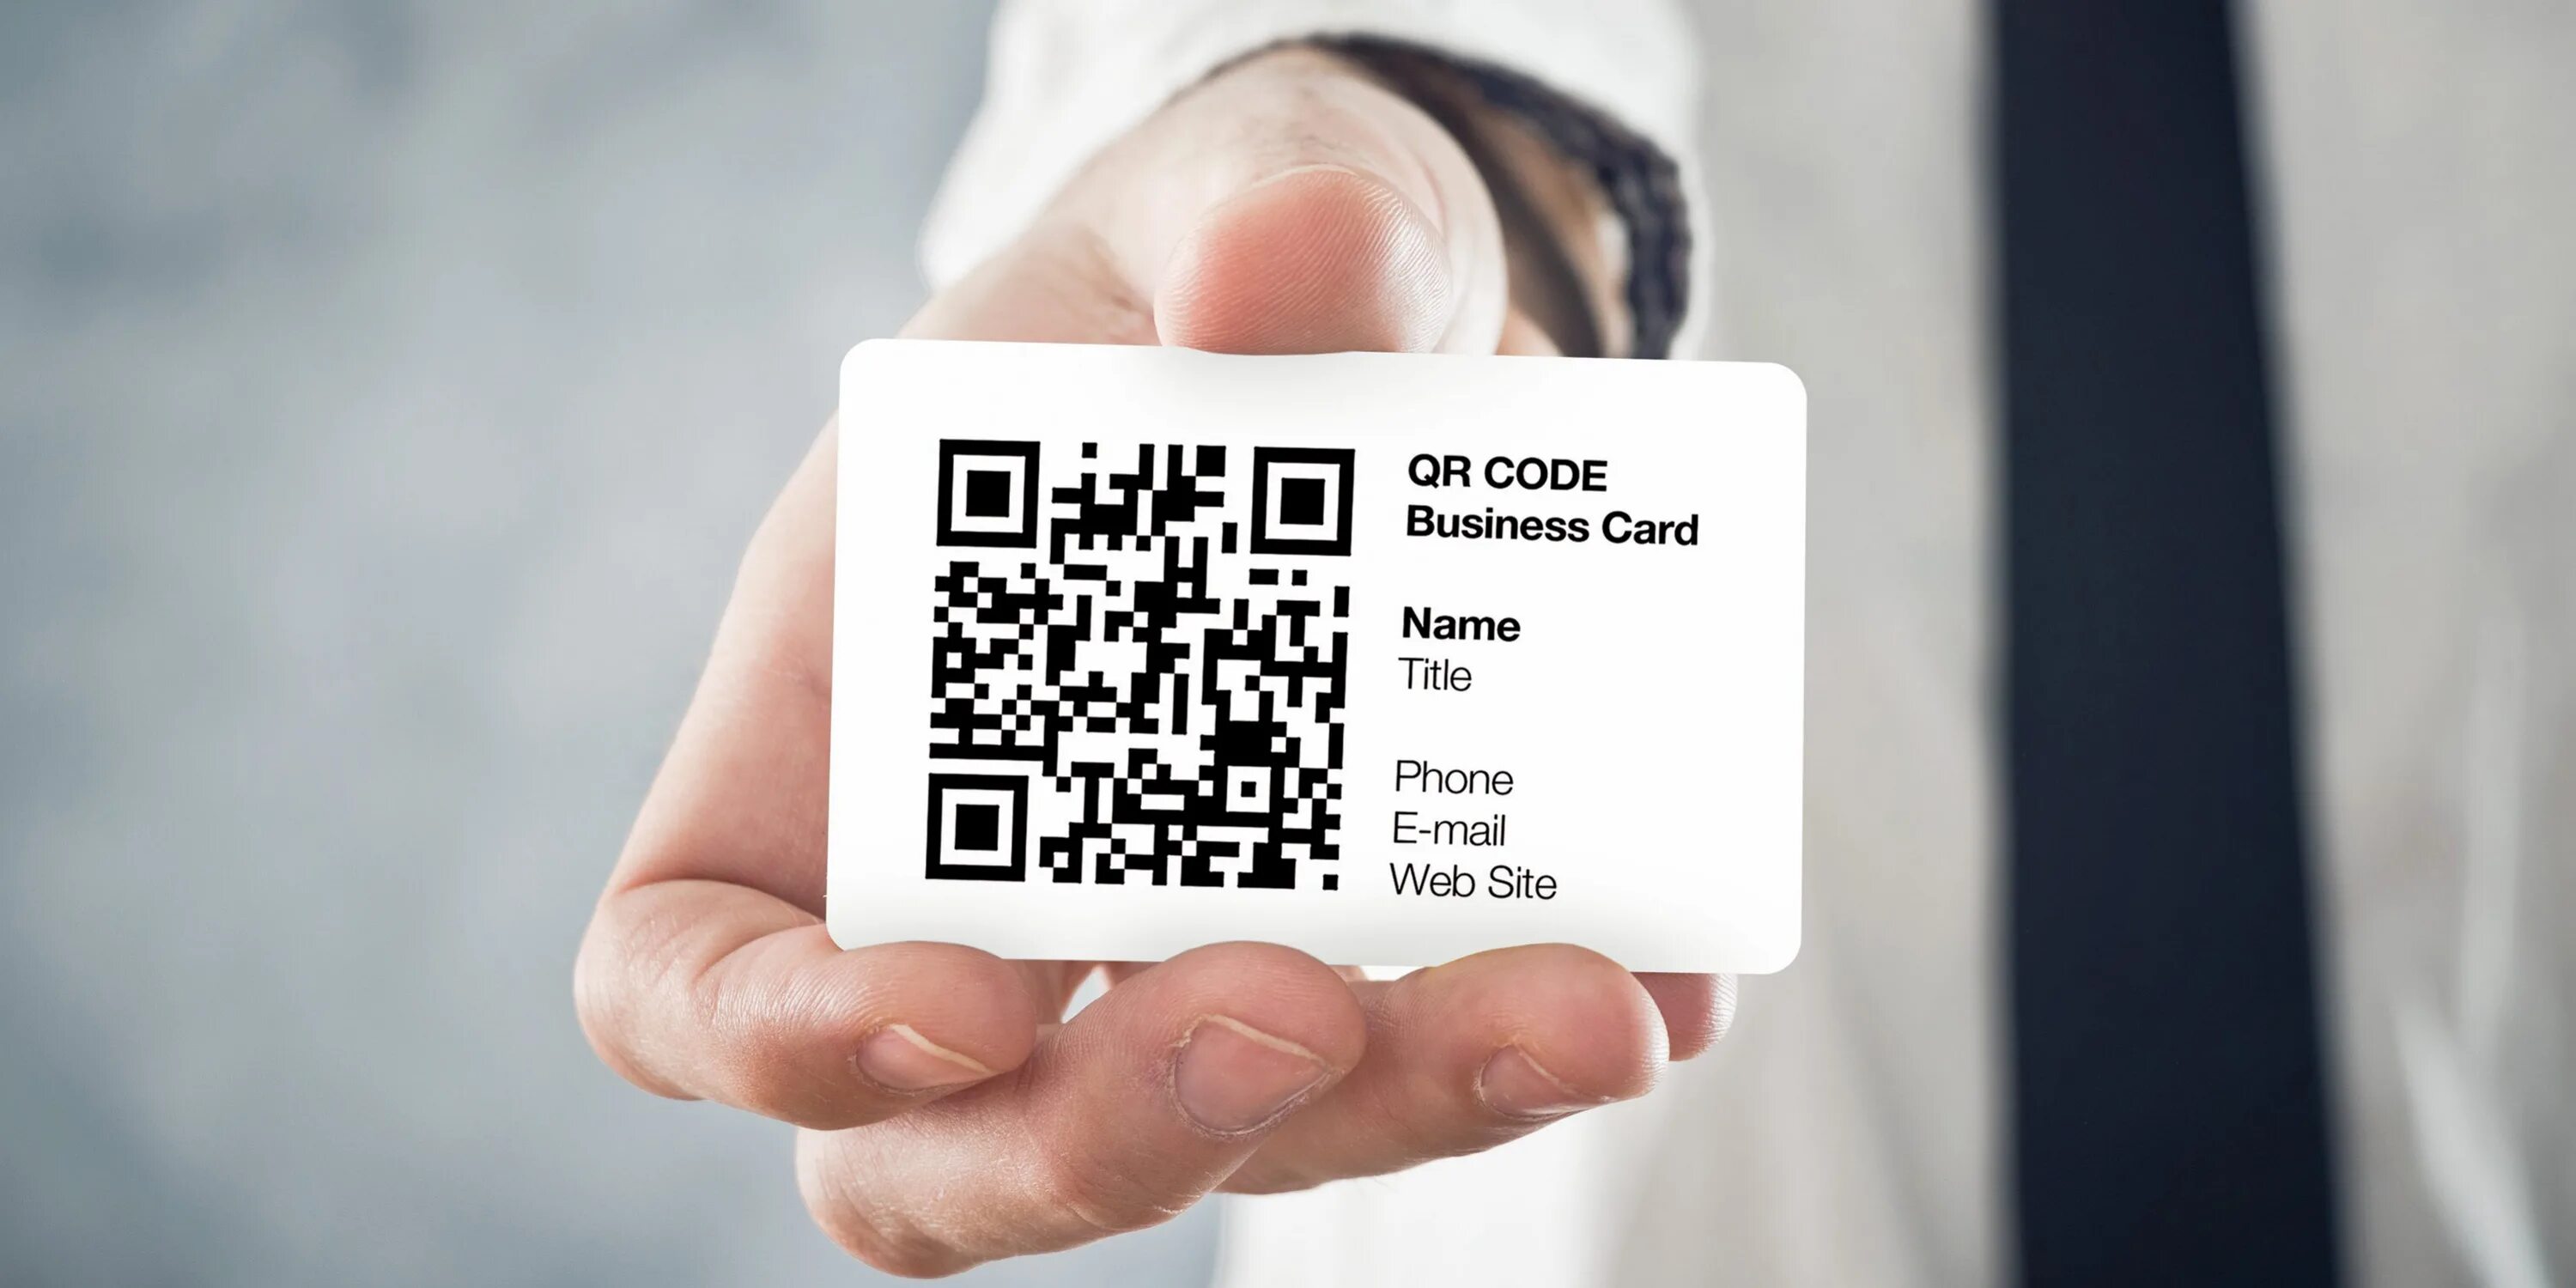 Qr код такси. Визитка с QR кодом. Пластиковая визитка с QR кодом. Образец визитки с QR кодом. Бейджик с QR кодом.